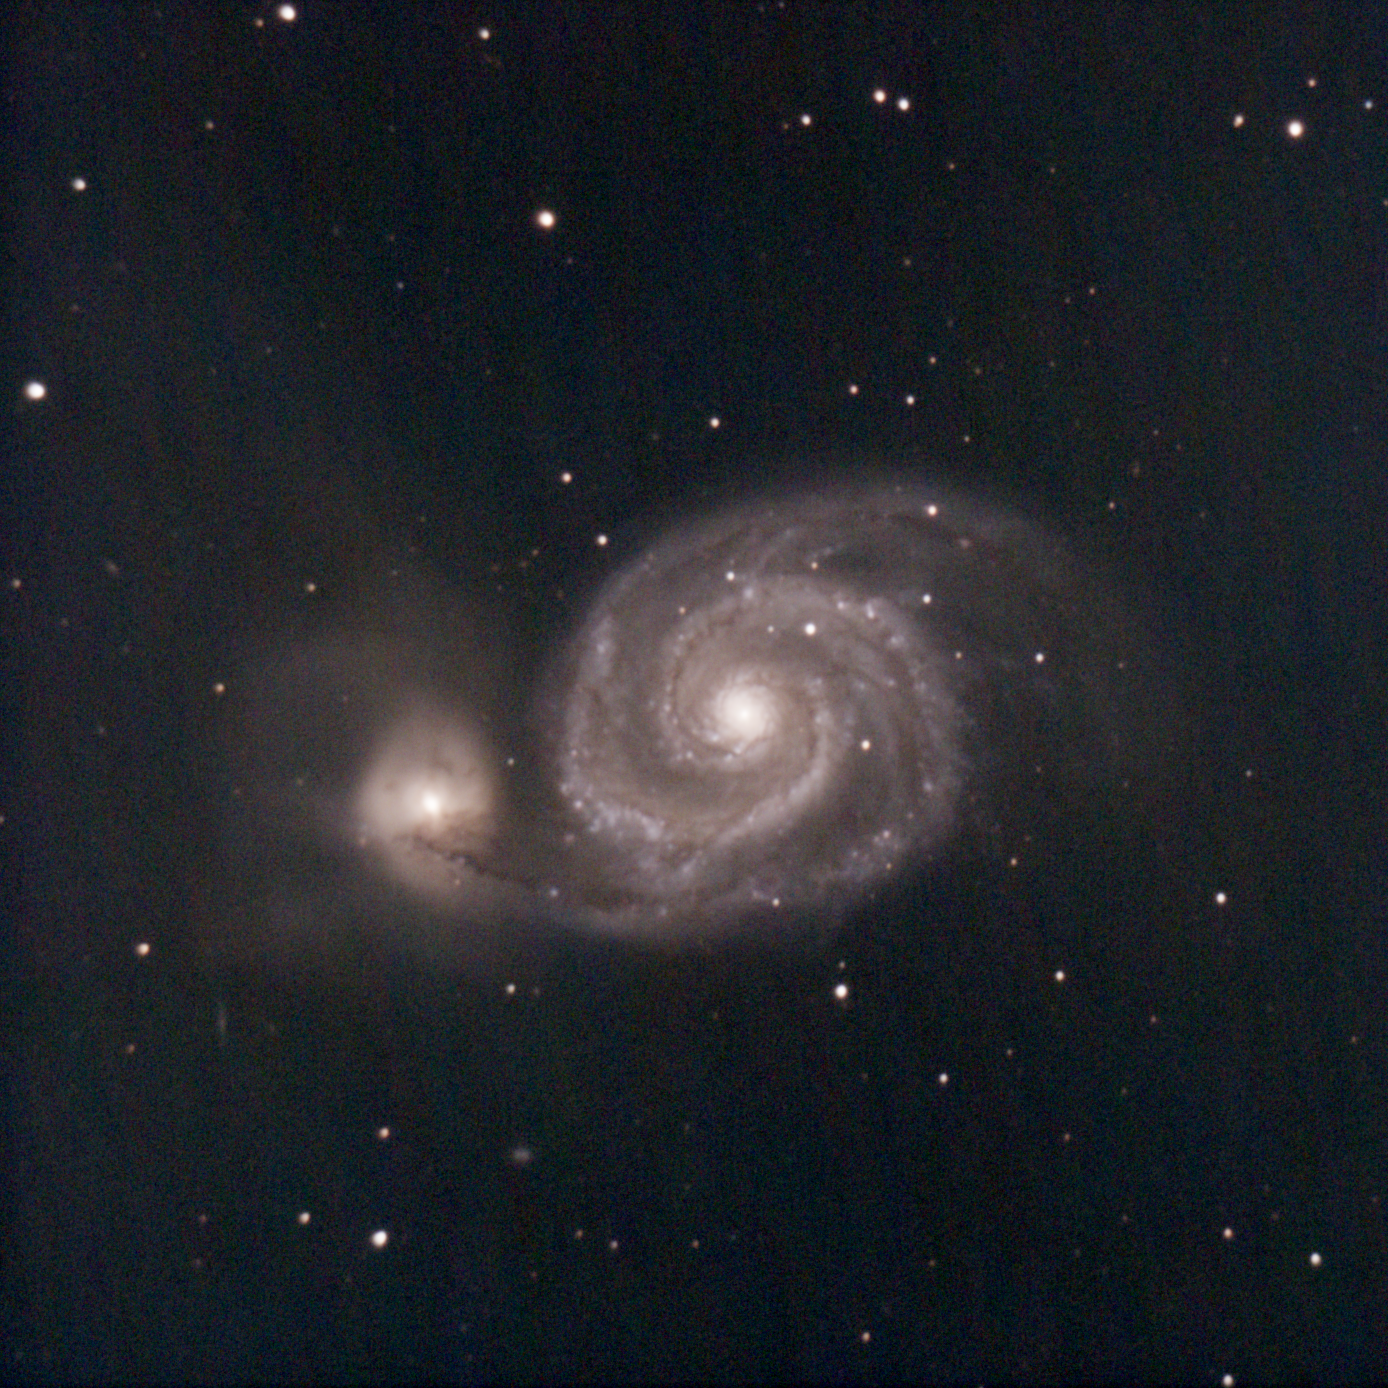 M51 涡状星系 (Whirlpool Galaxy)，是位于北天，大熊座附近的一个星系，由M51a(右)和M51b(左)两个相互重力扰动的星系组成。RGB Bin2 10s * 994，共计2.7小时曝光